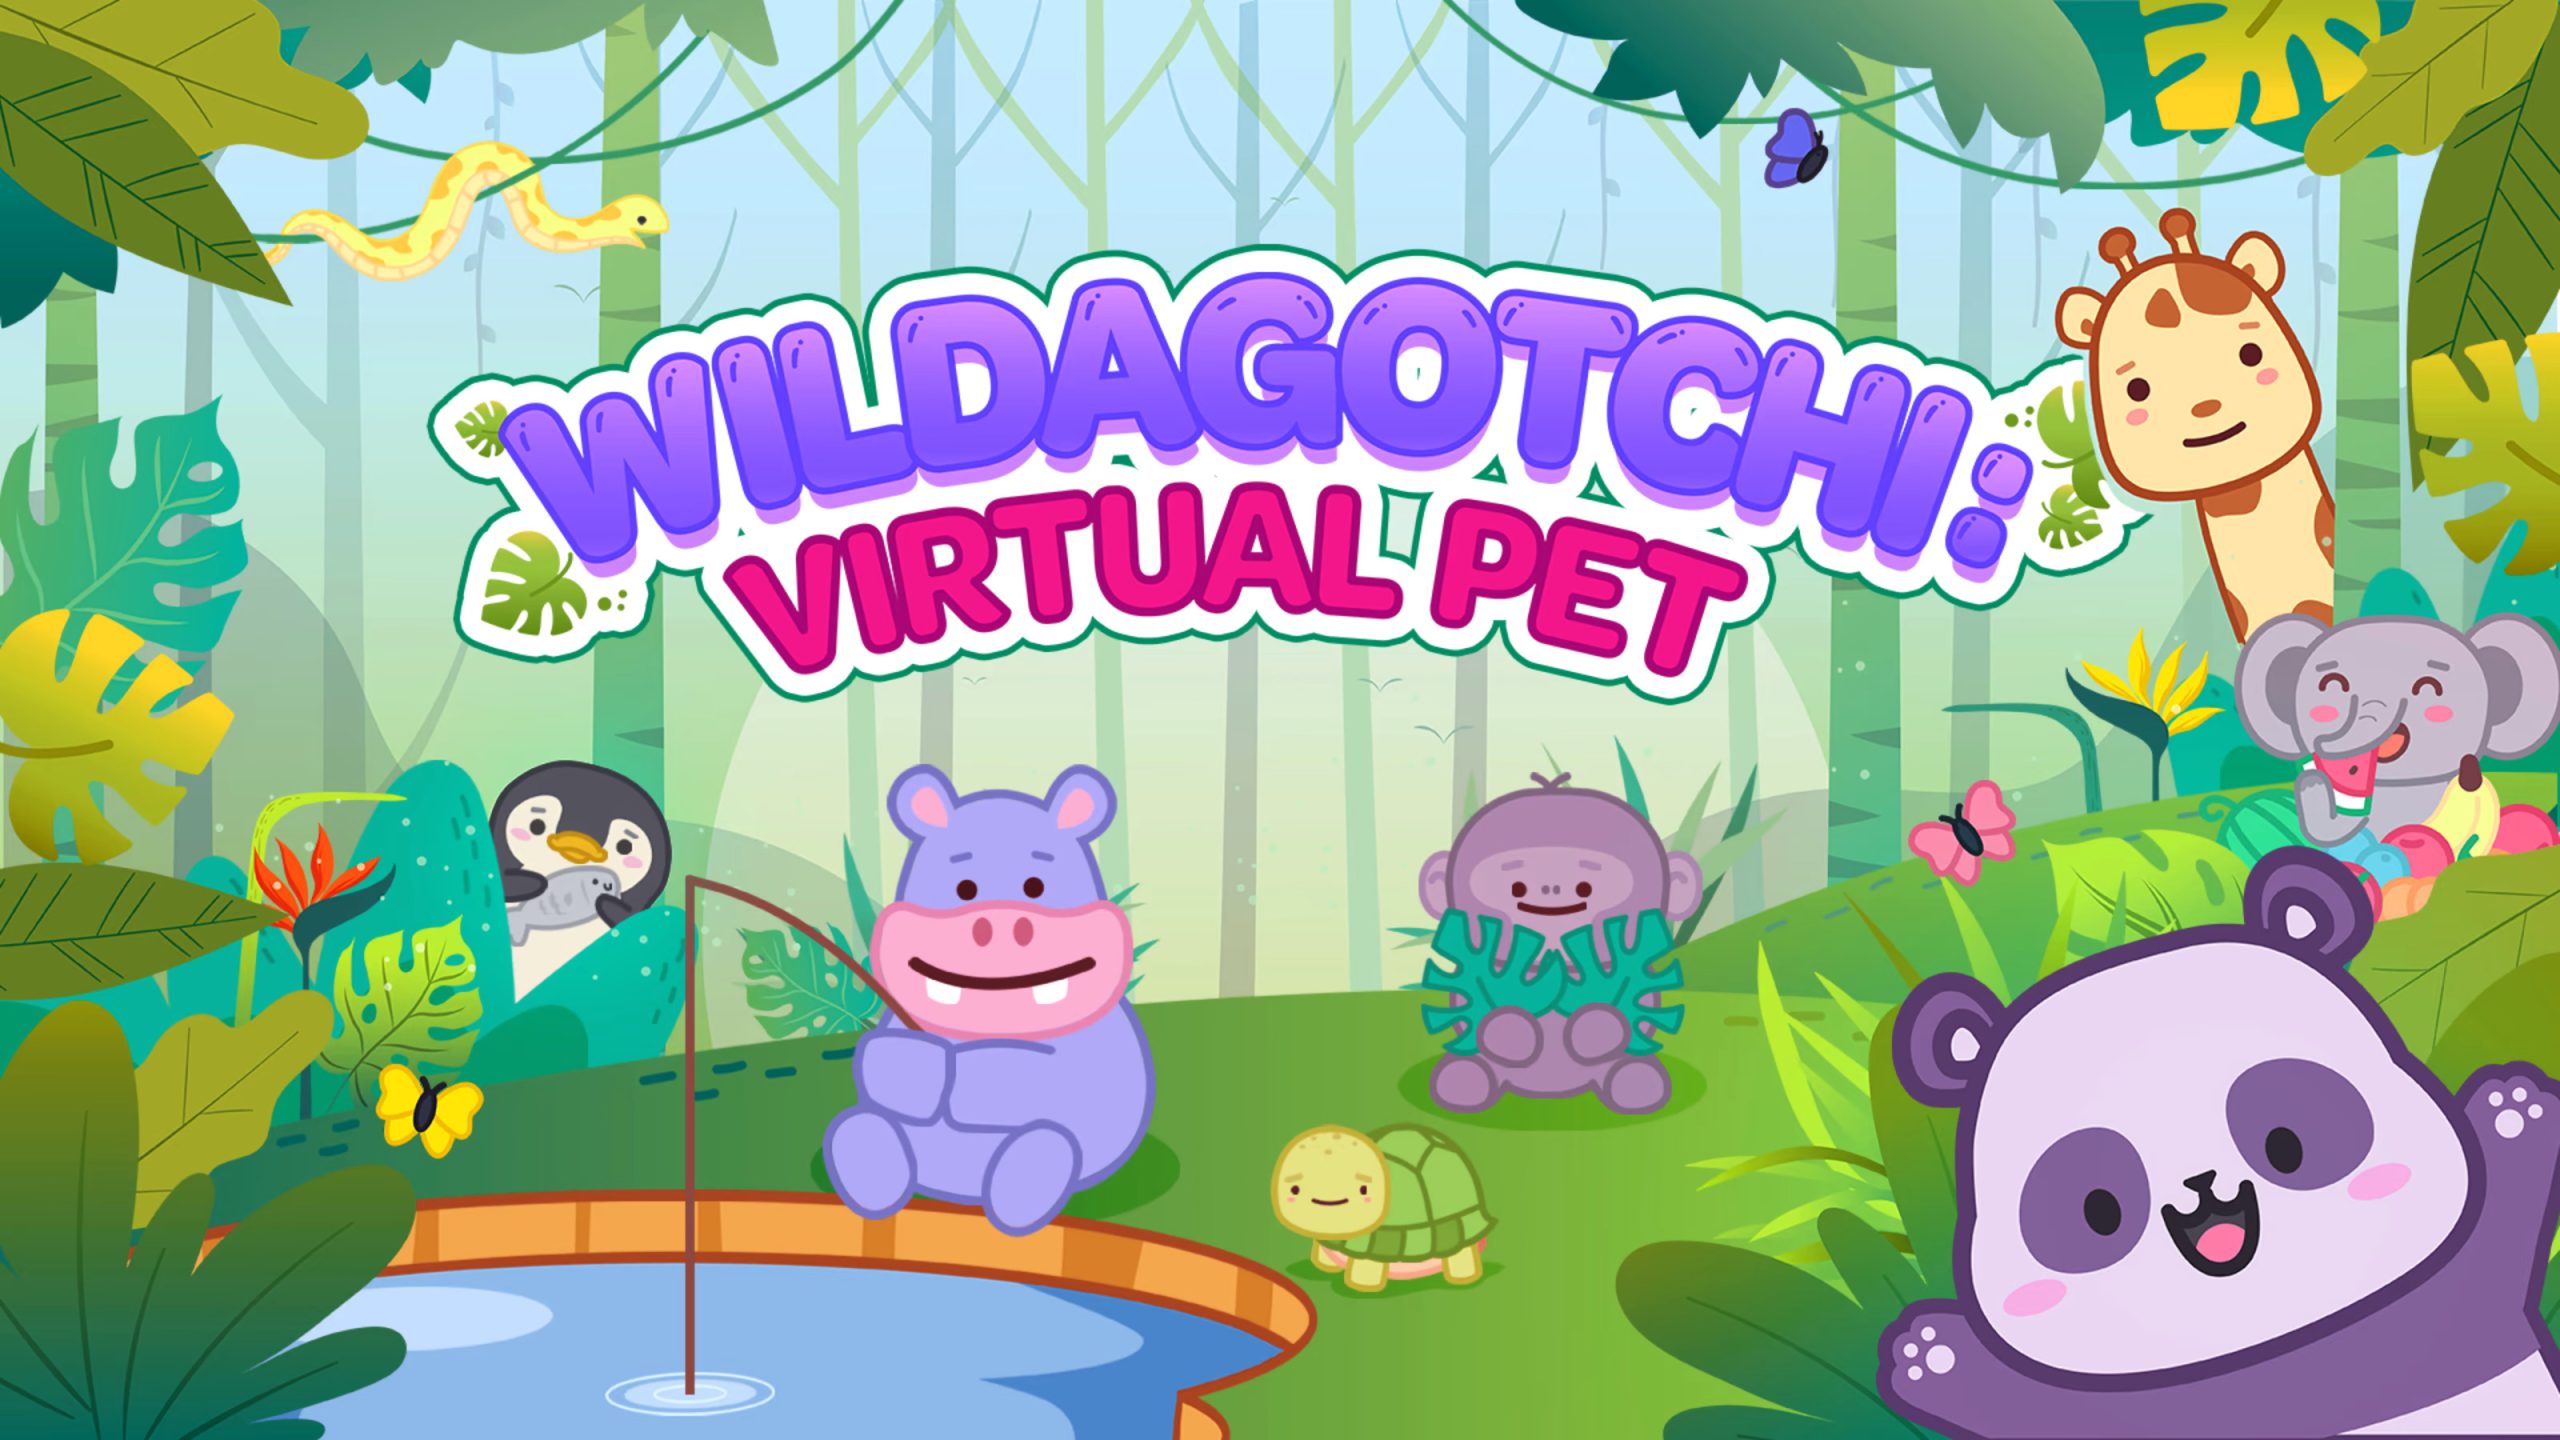 The key art for Wildagotchi: Virtual Pet.